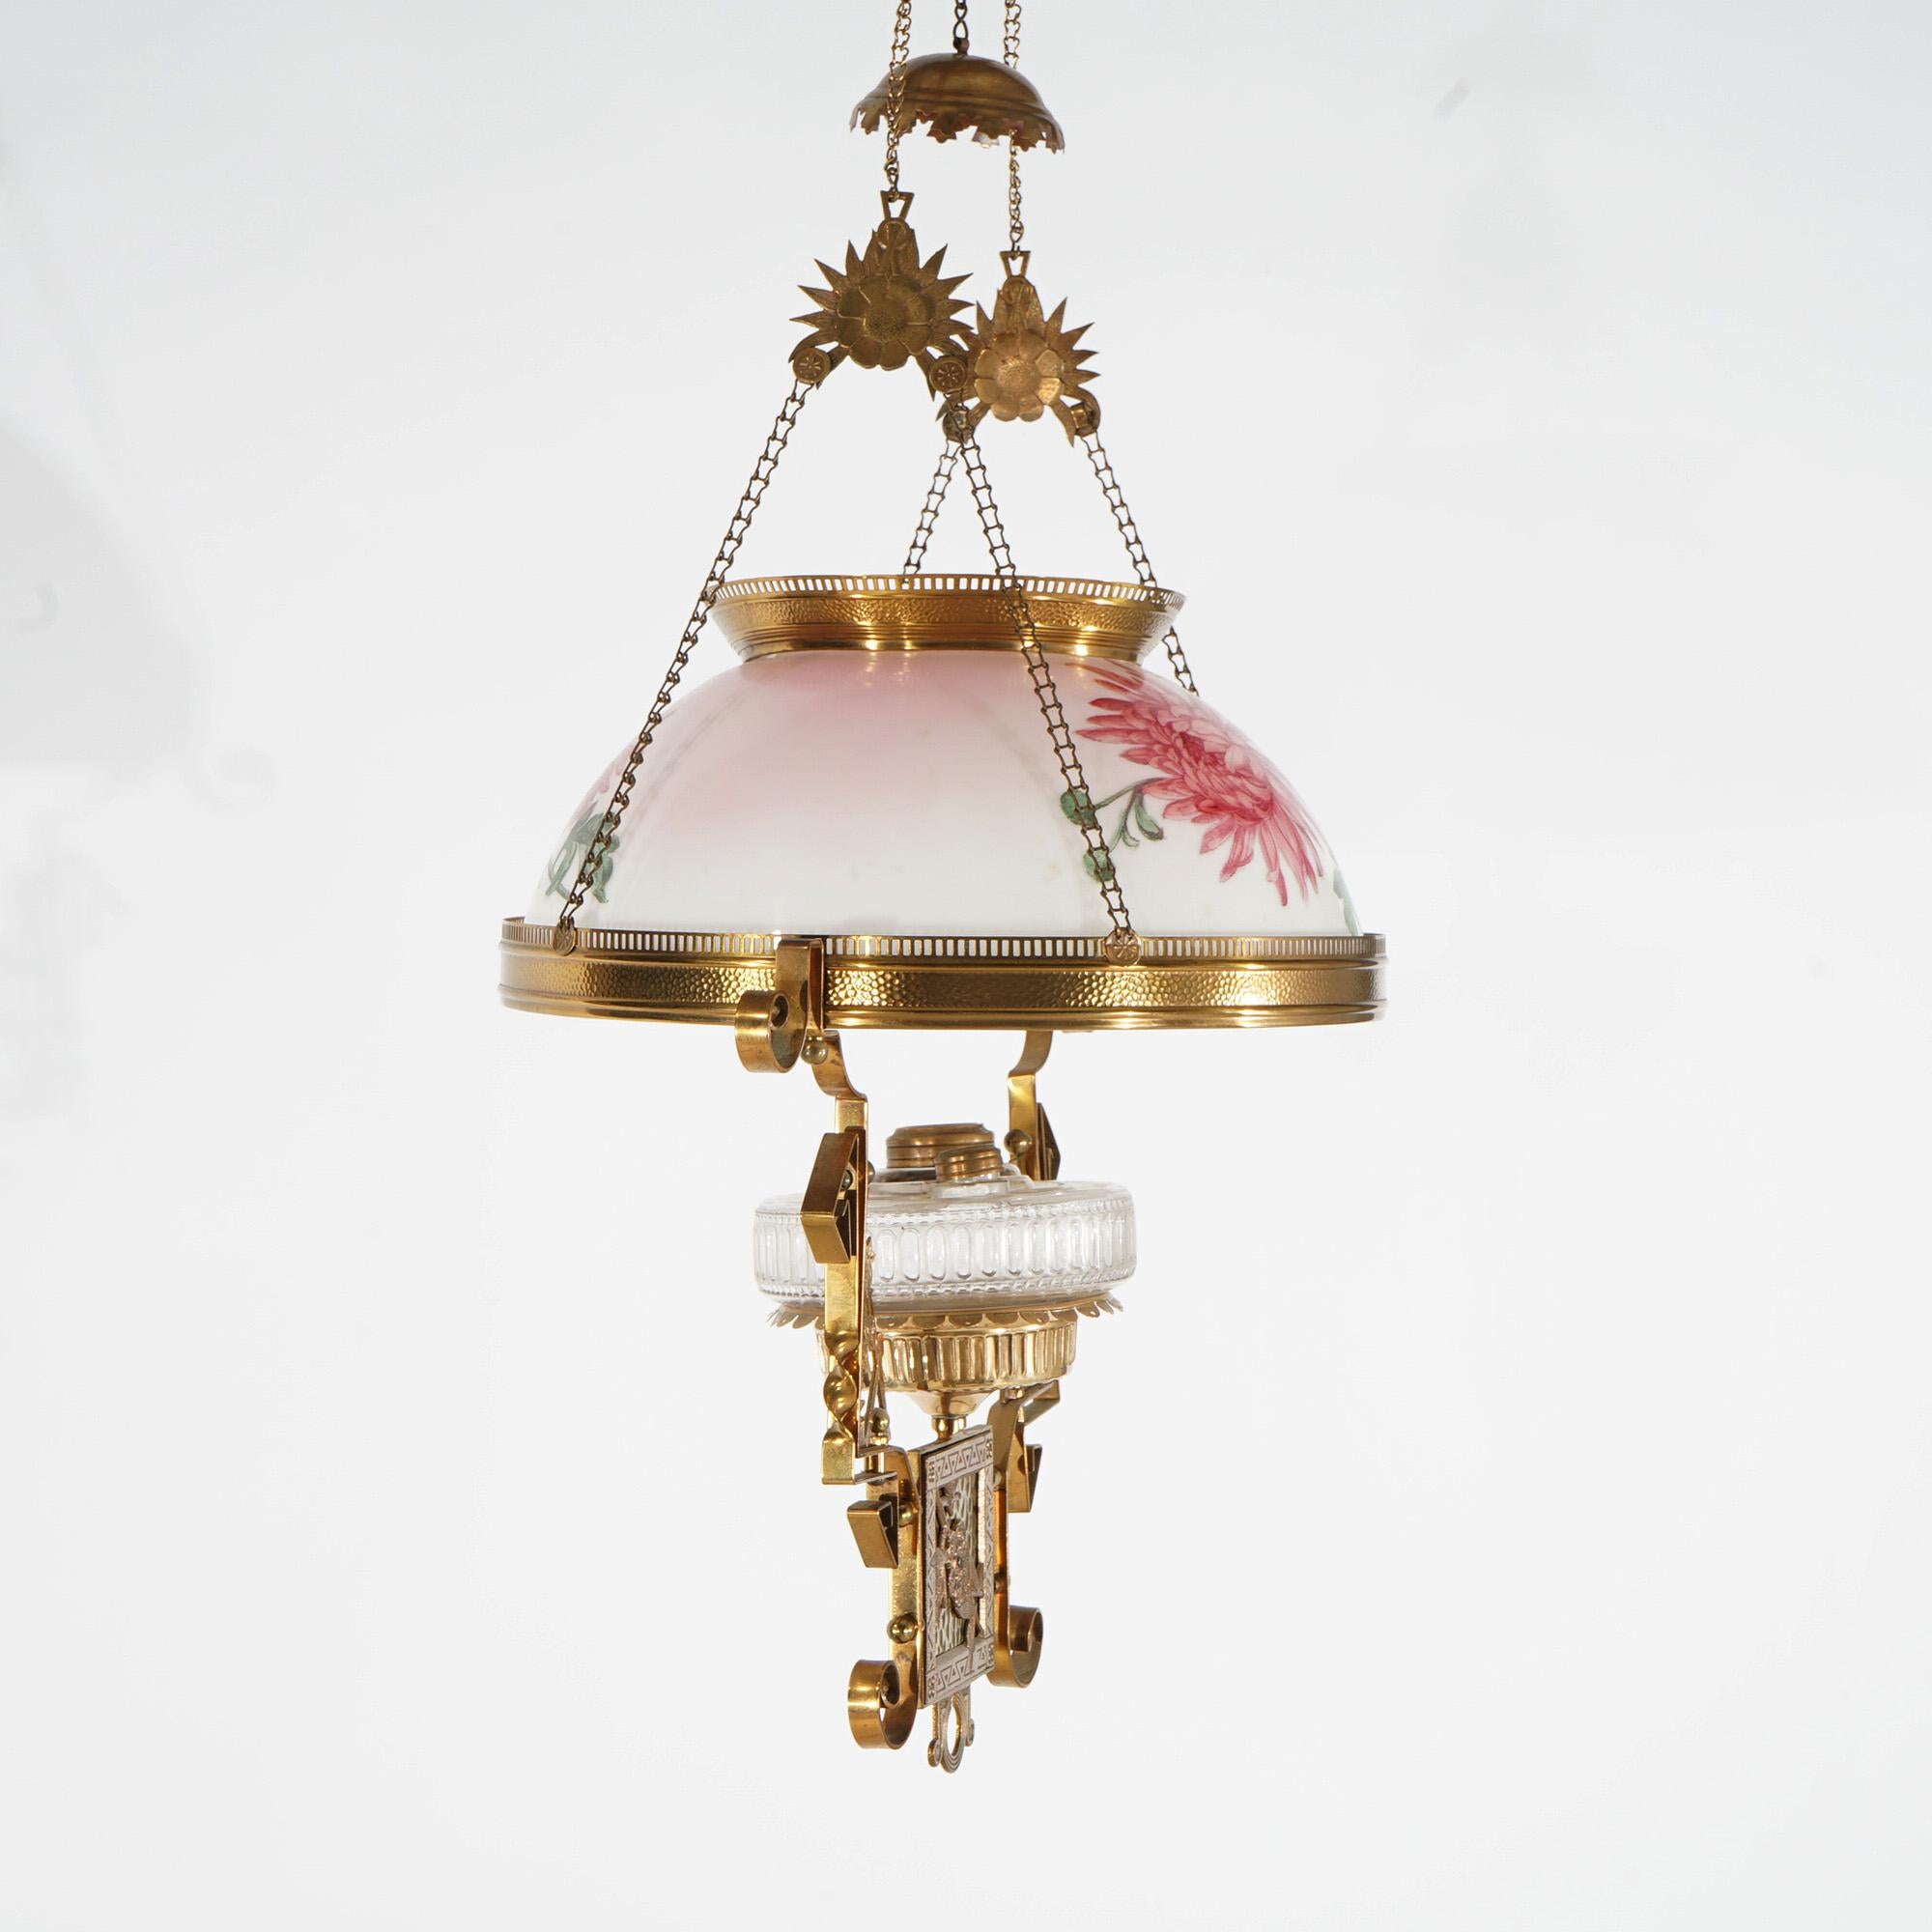 Brass Antique Aesthetic Movement Hand Painted Hanging Kerosene Lamp C1890 For Sale